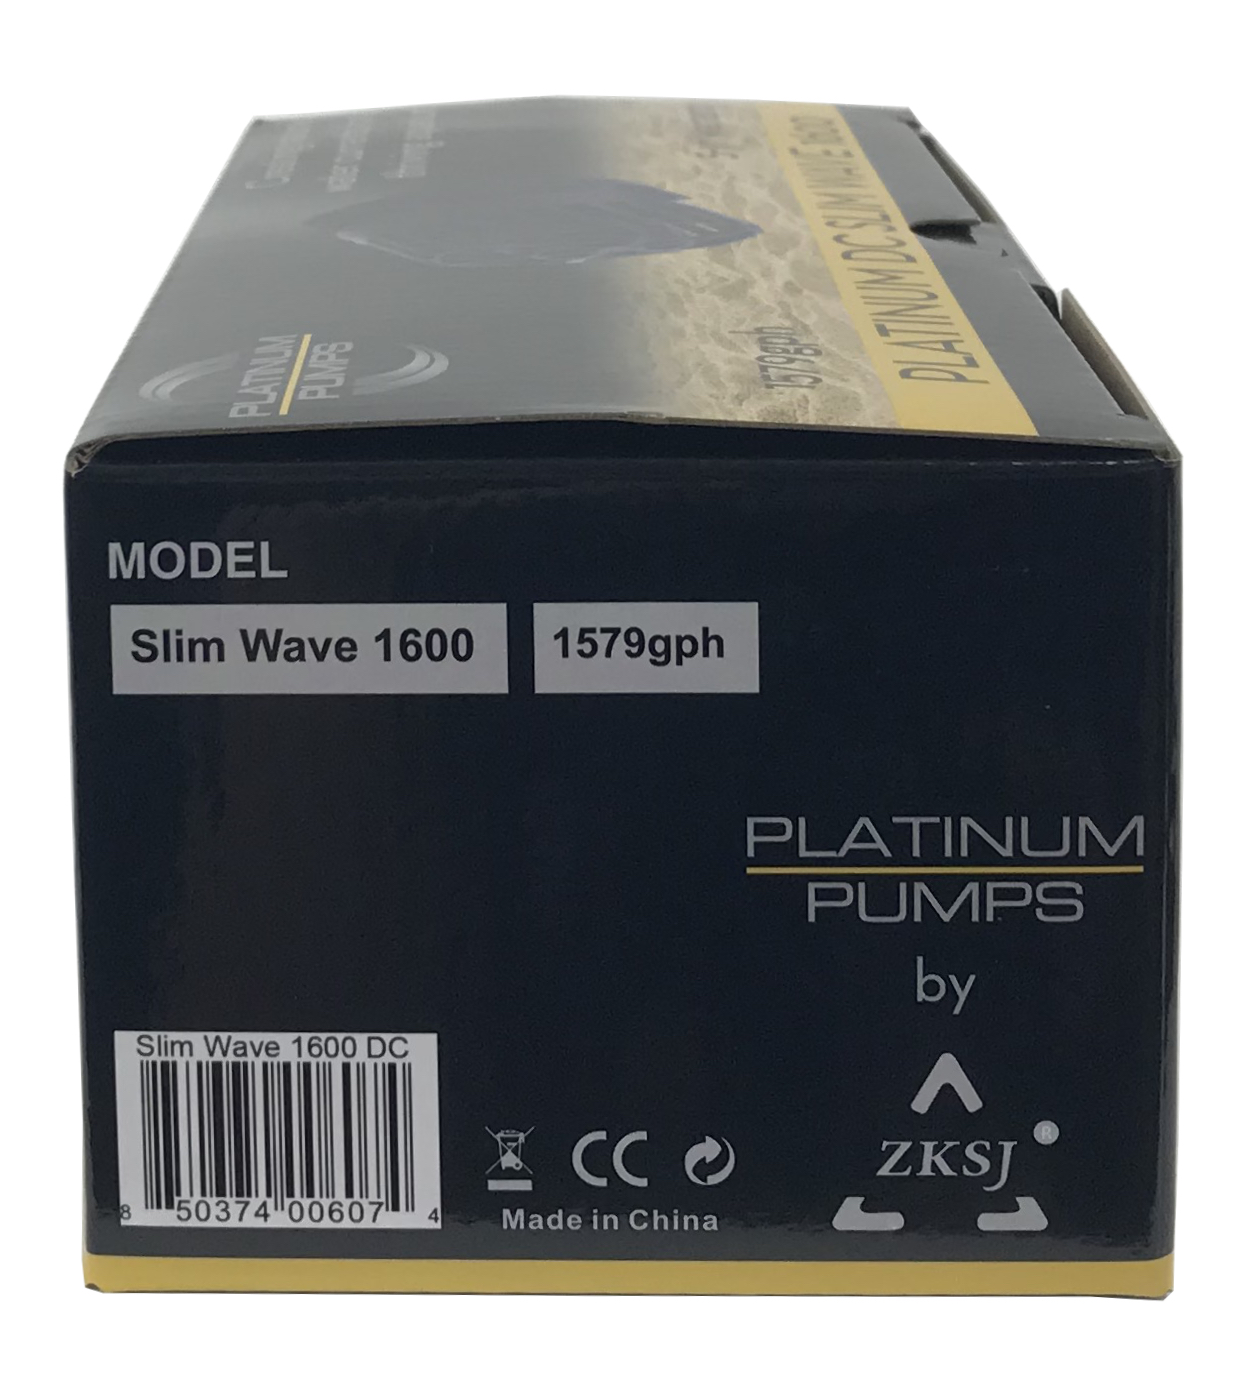 Platinum DC Slim Wave 1600 Pump - 1579 gph